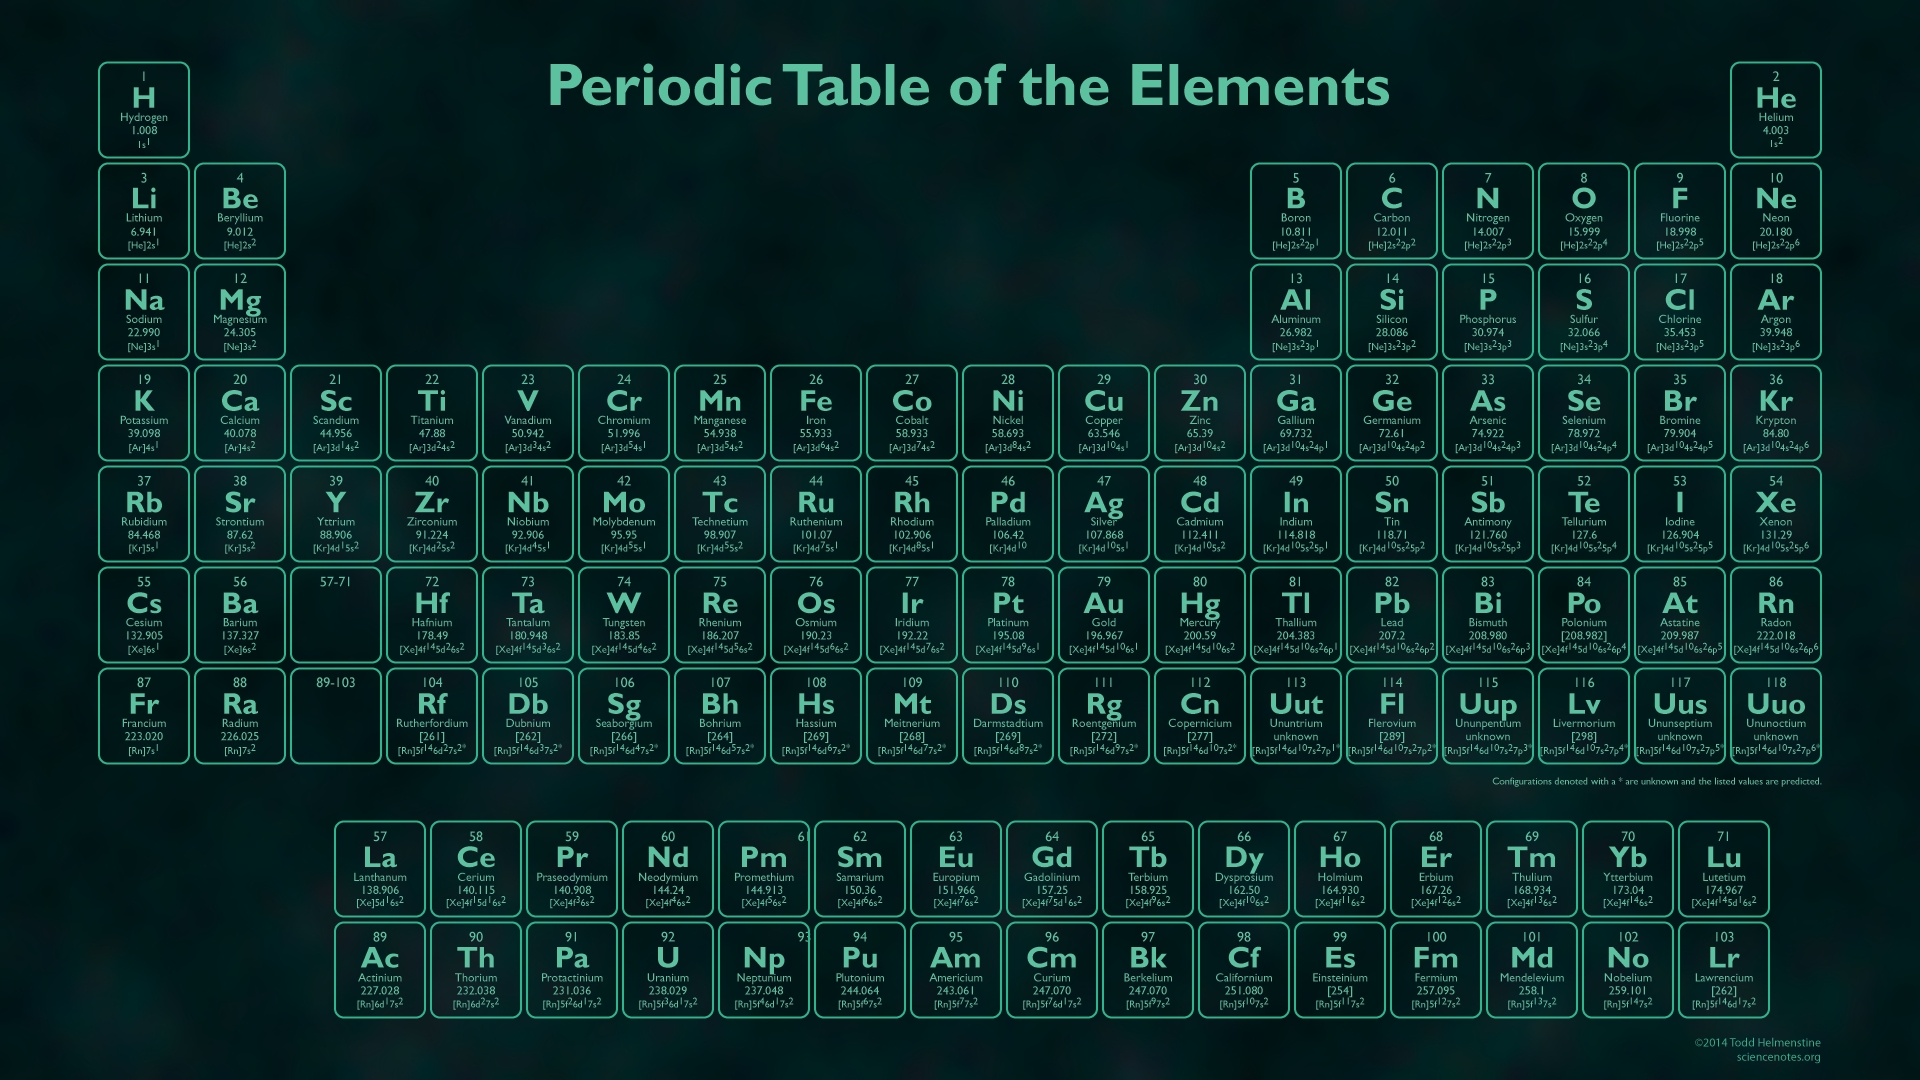 glow in the dark periodic table wallpaper